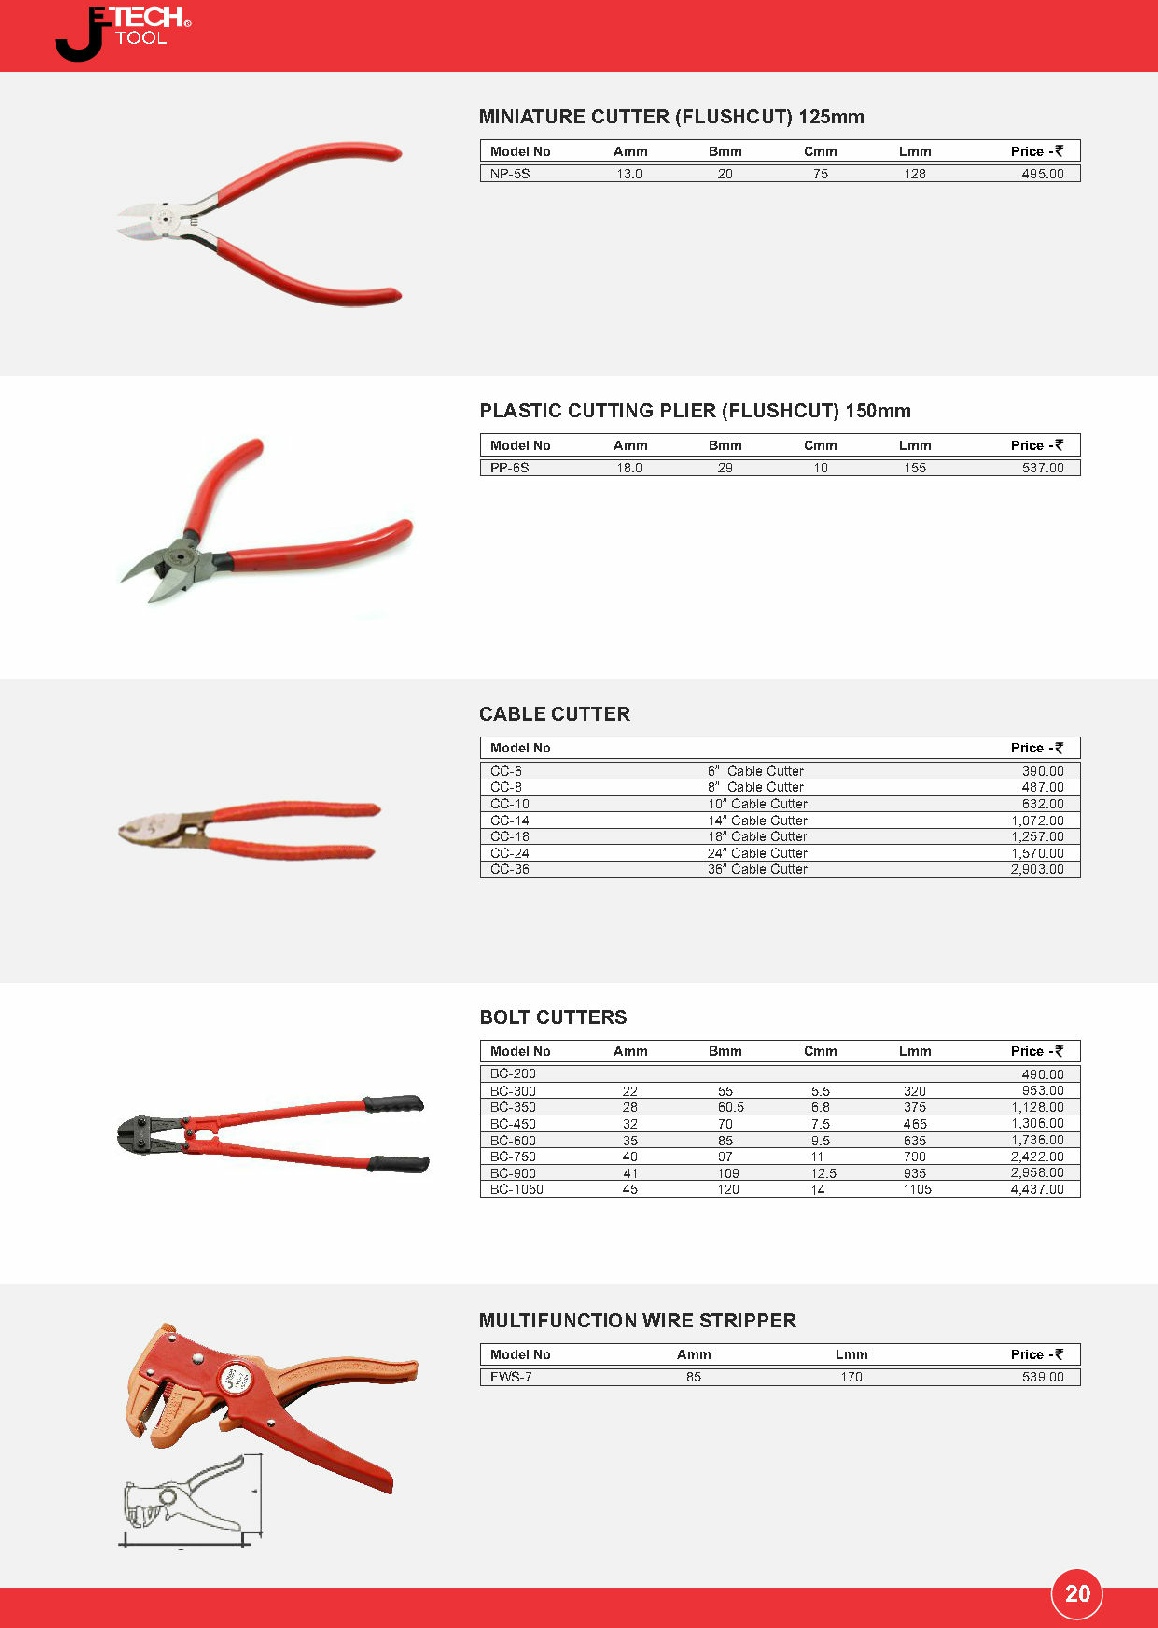 miniature cutter,plastic cutting plier,cable cutter,bolt cutter,multi function wire stripper,jetech tools chennai